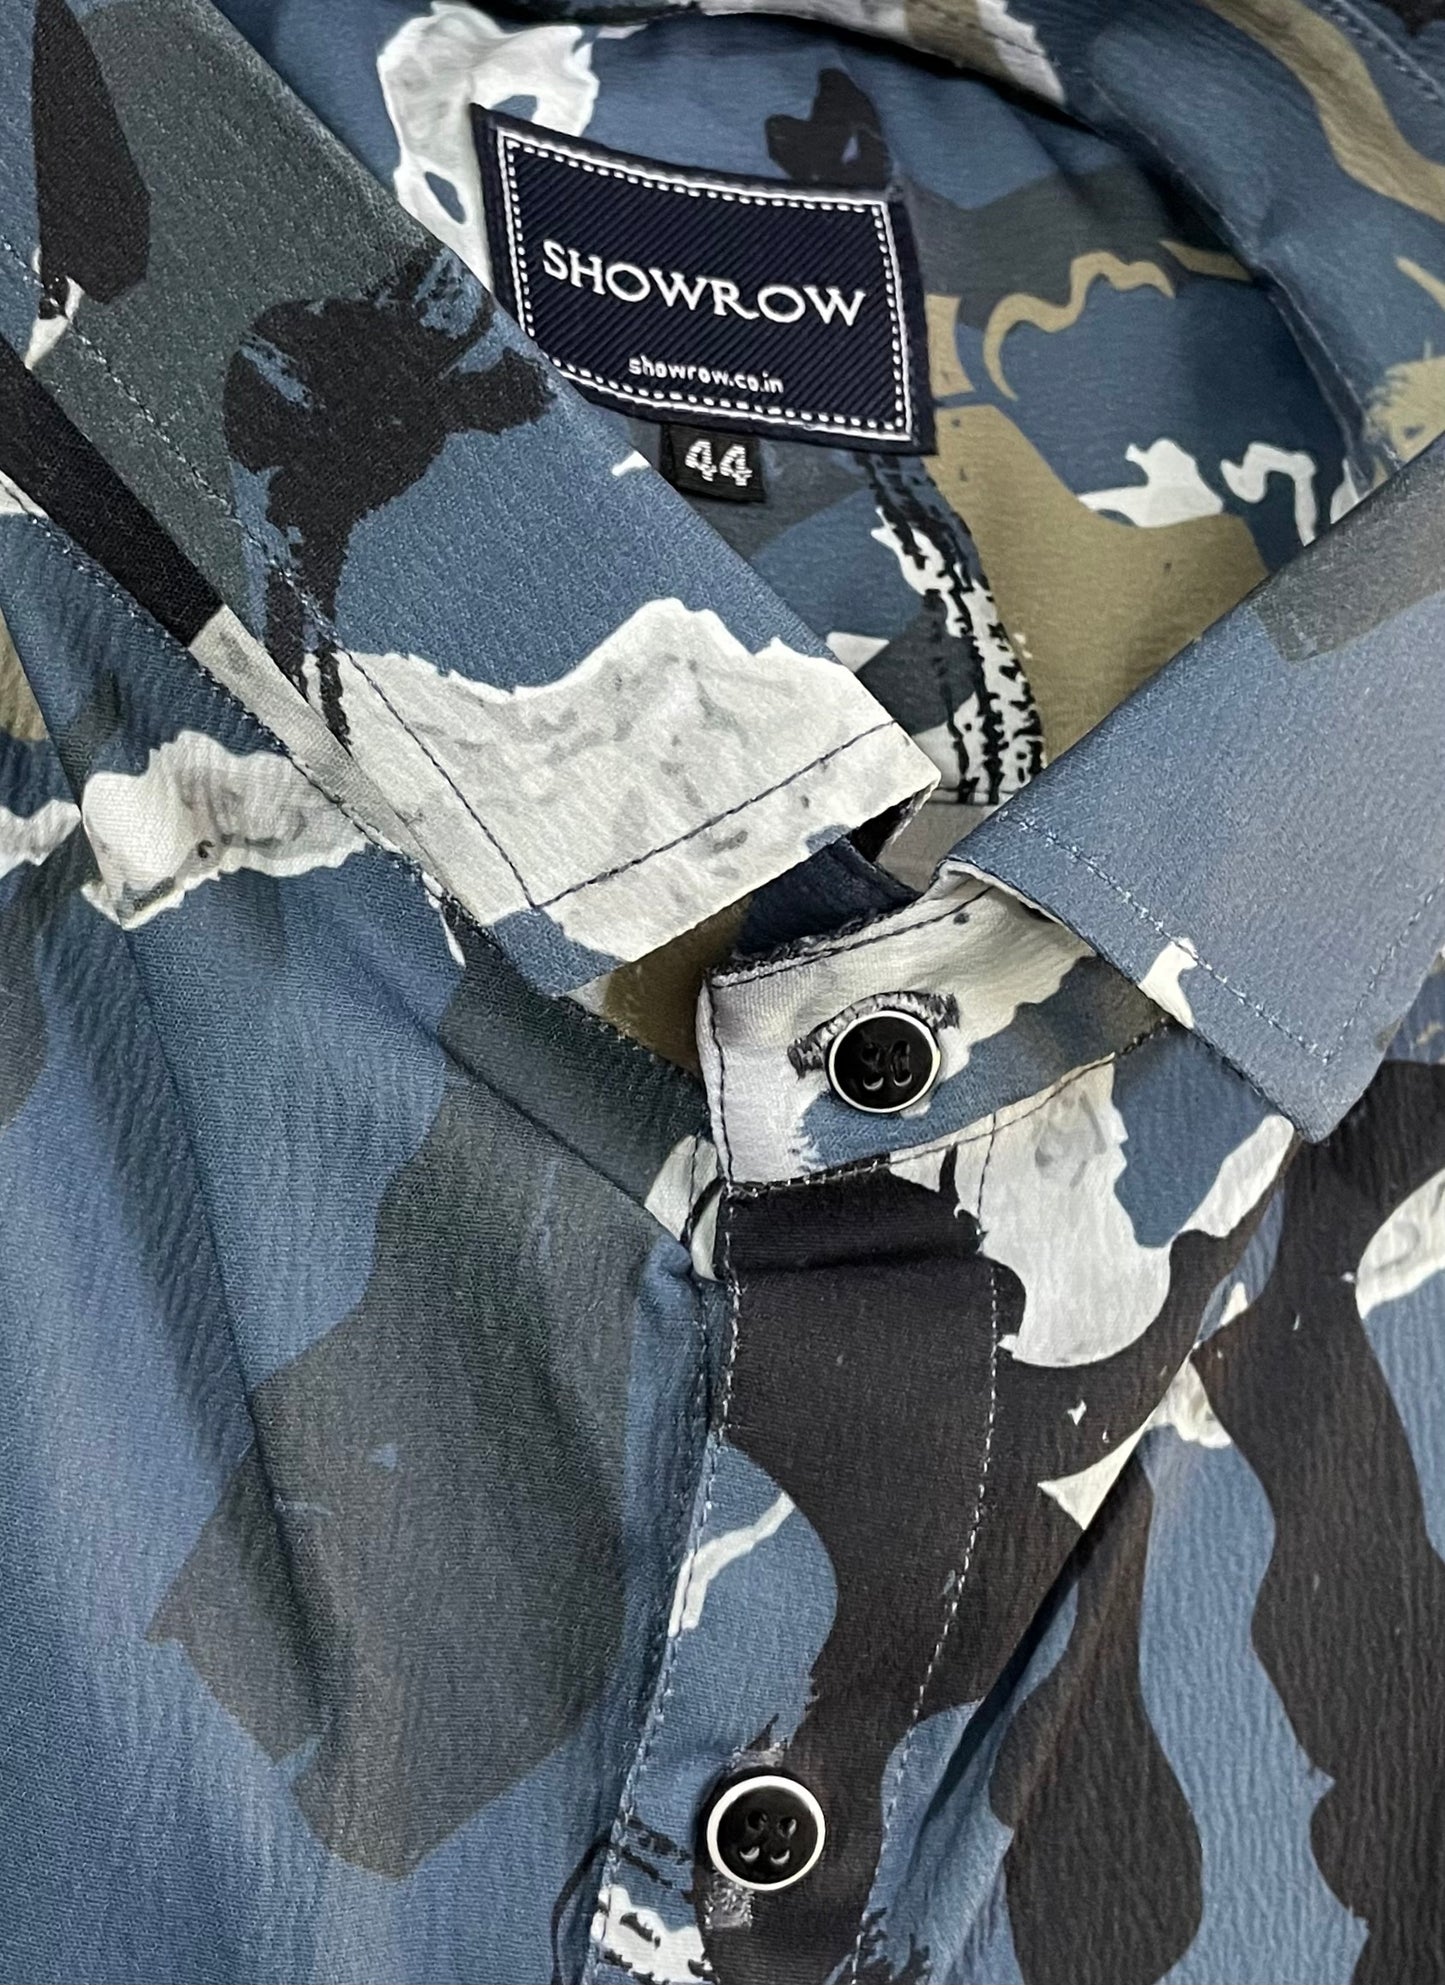 Navy Blue Abstract Printed Half Sleeves Cotton Shirt